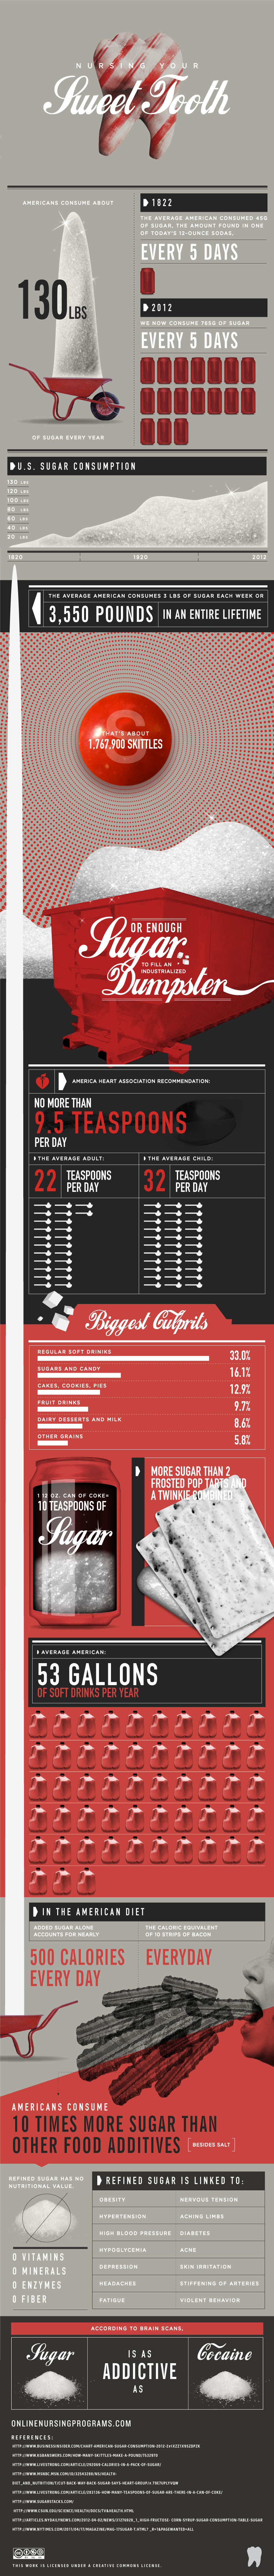 InfoGraphic on Sugar Consumption,